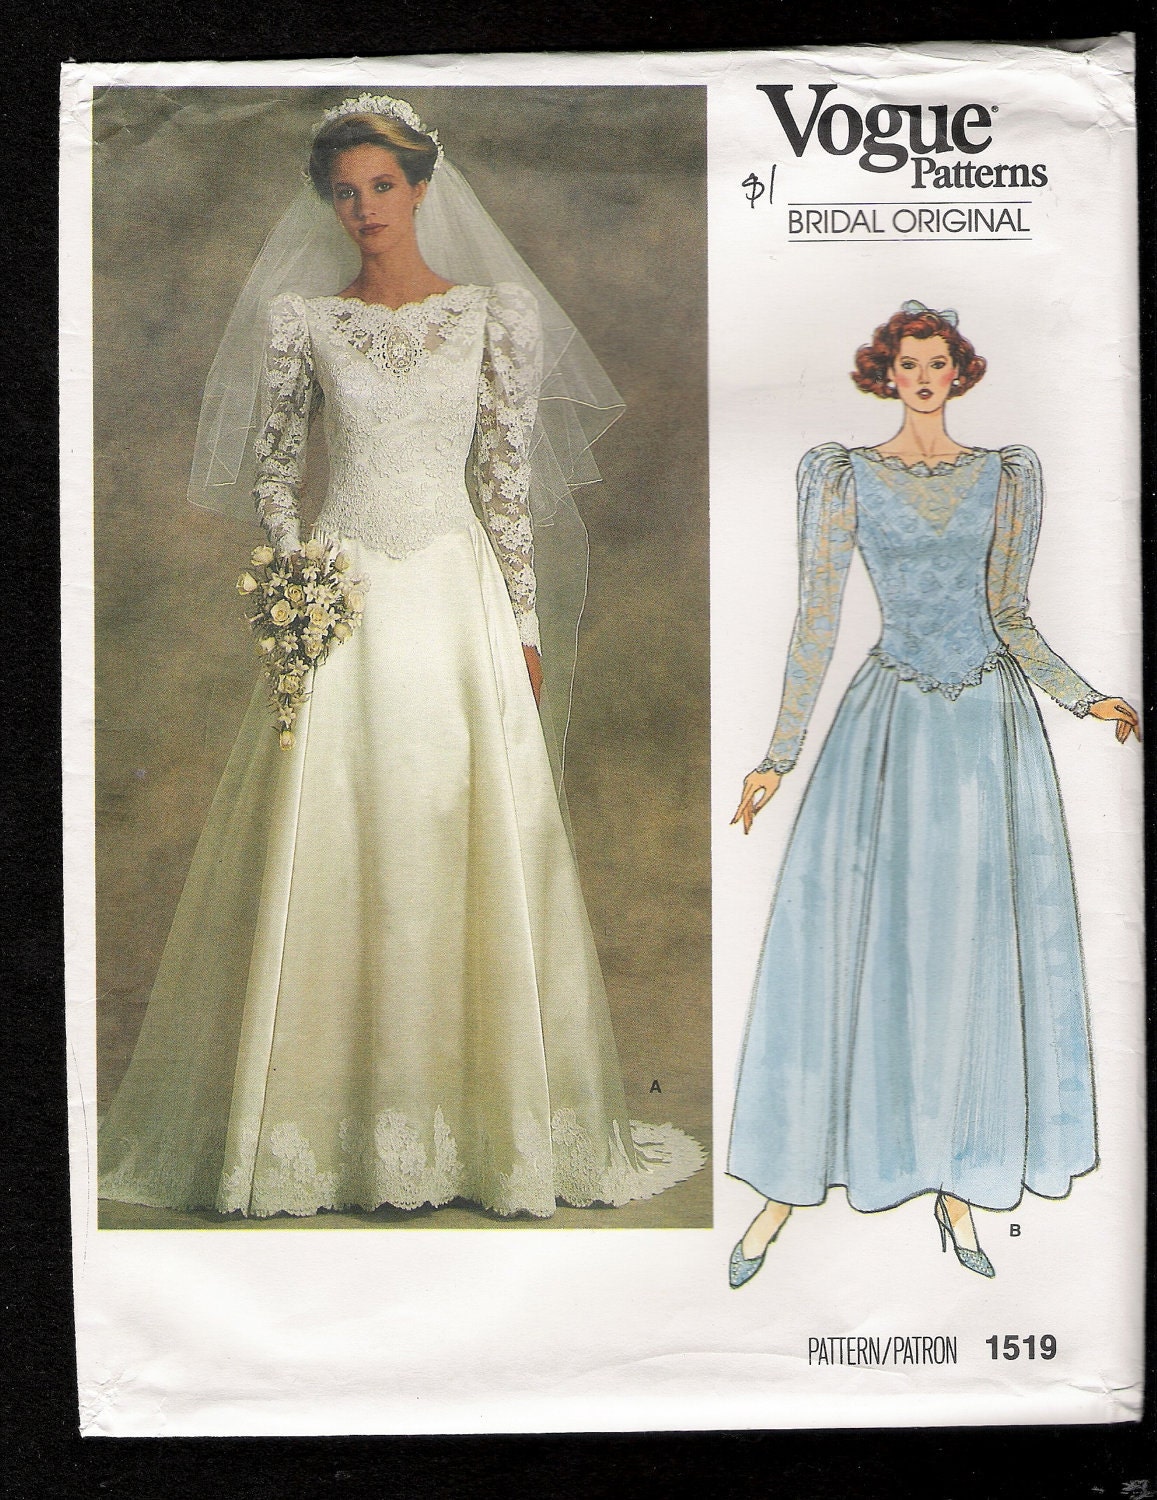 The Vogue Influence: Did Anna Wintour Pick KateвЂ™s Wedding Dress?